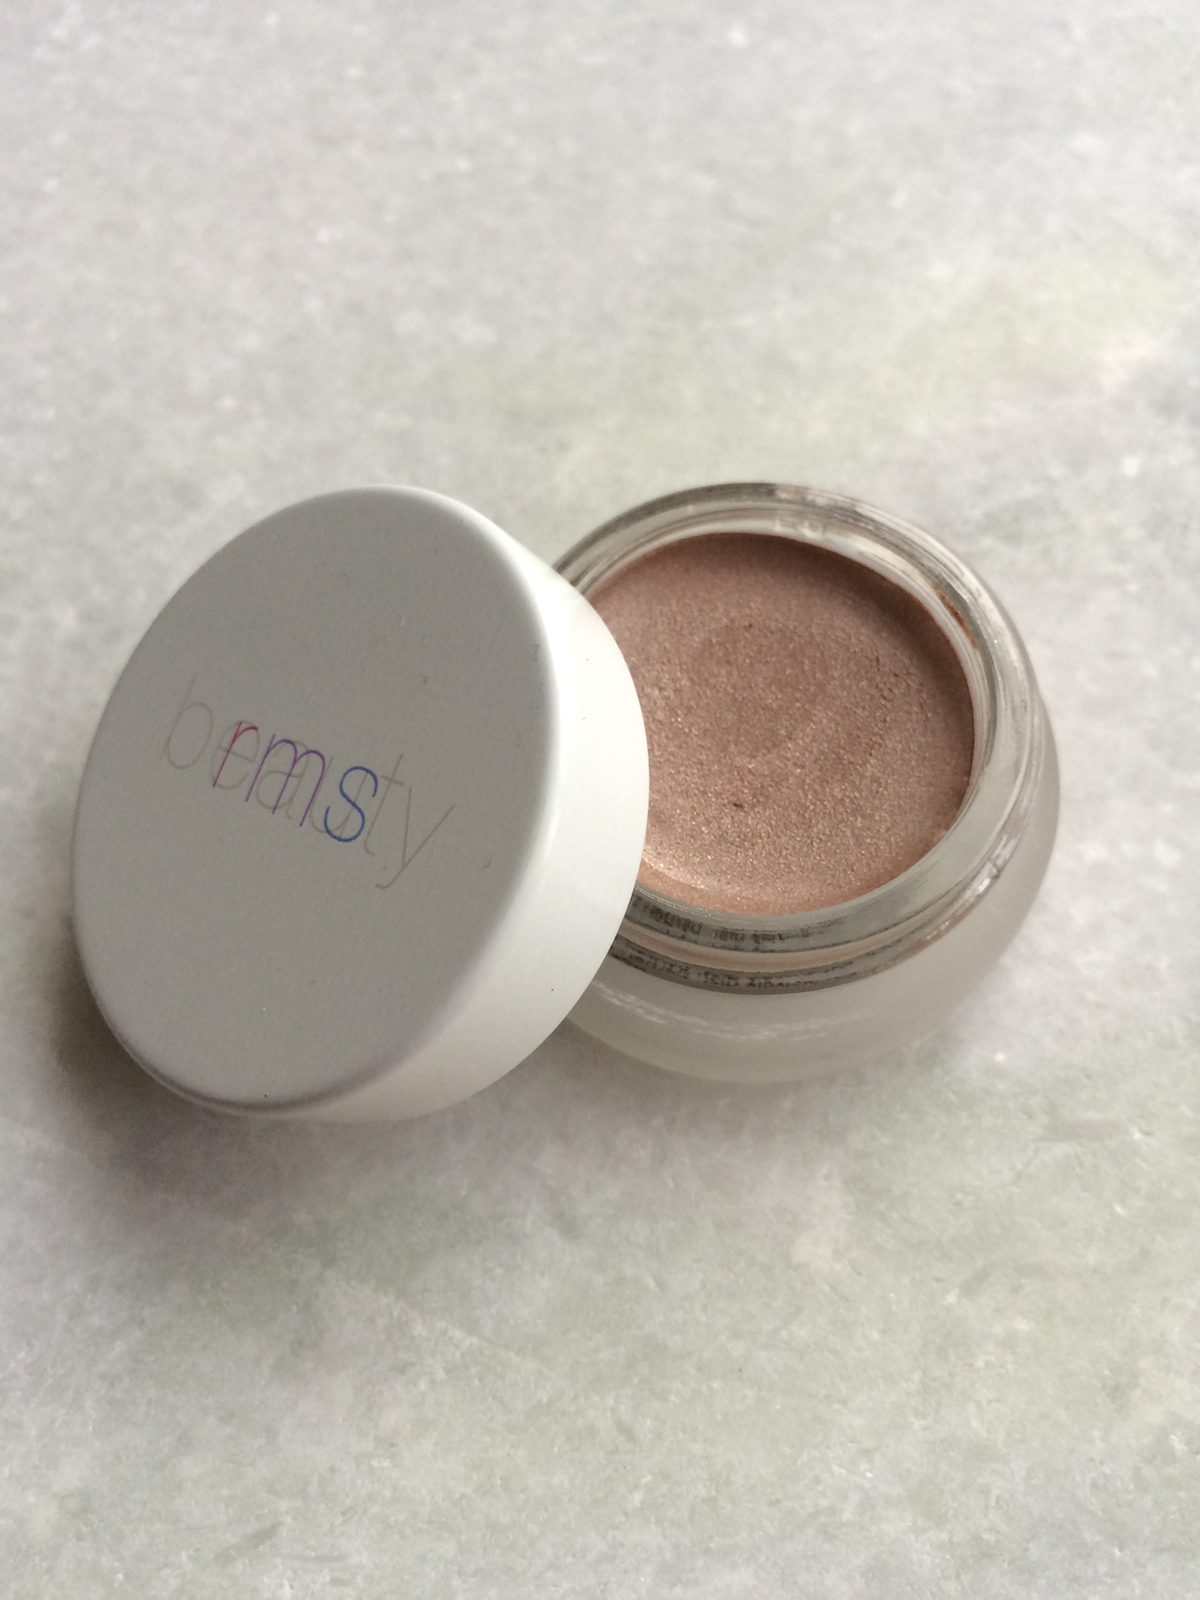 rms beauty eye polish myth with lid|skonhetssnack.se